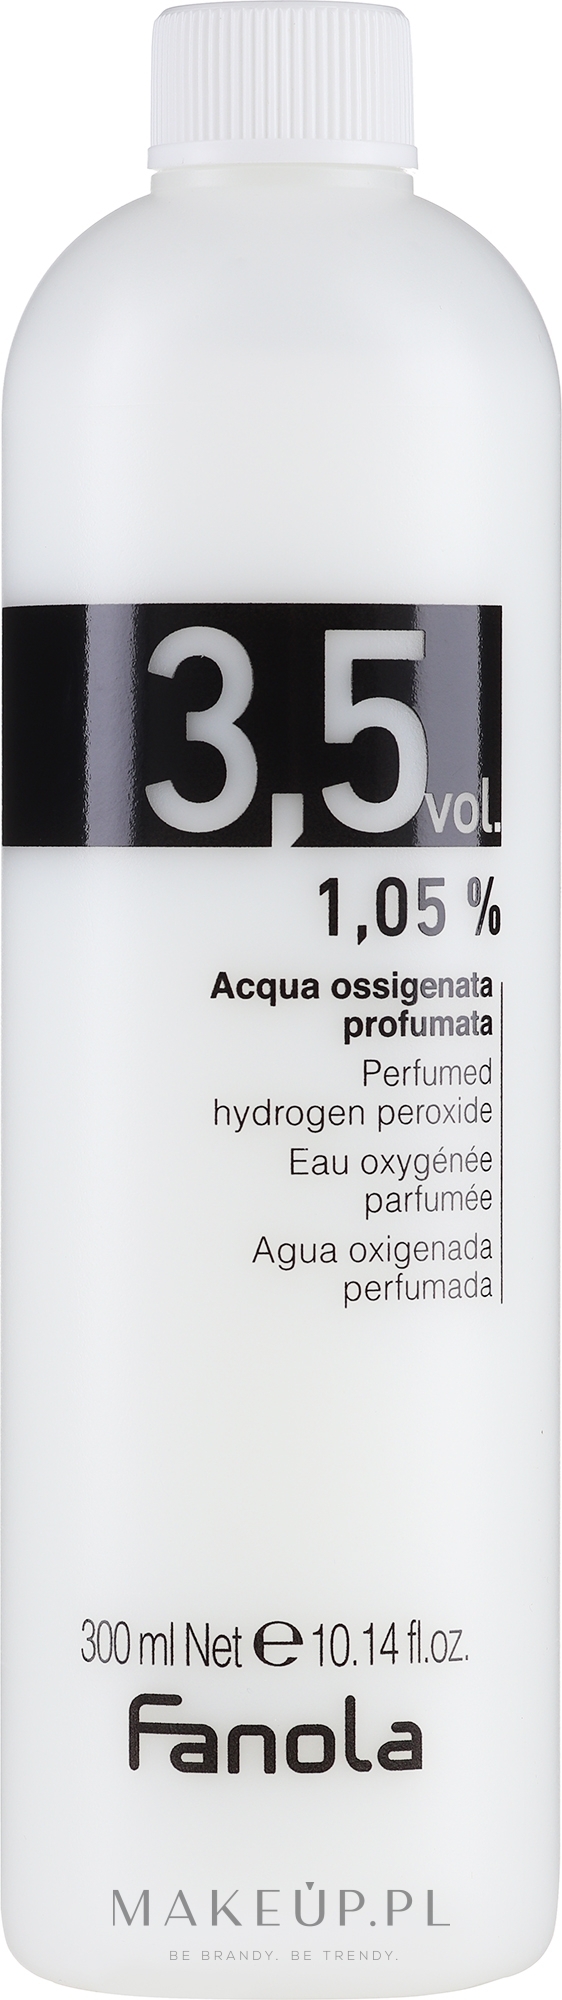 Emulsja utleniająca - Fanola Acqua Ossigenata Perfumed Hydrogen Peroxide Hair Oxidant 3.5vol 1.05% — Zdjęcie 300 ml